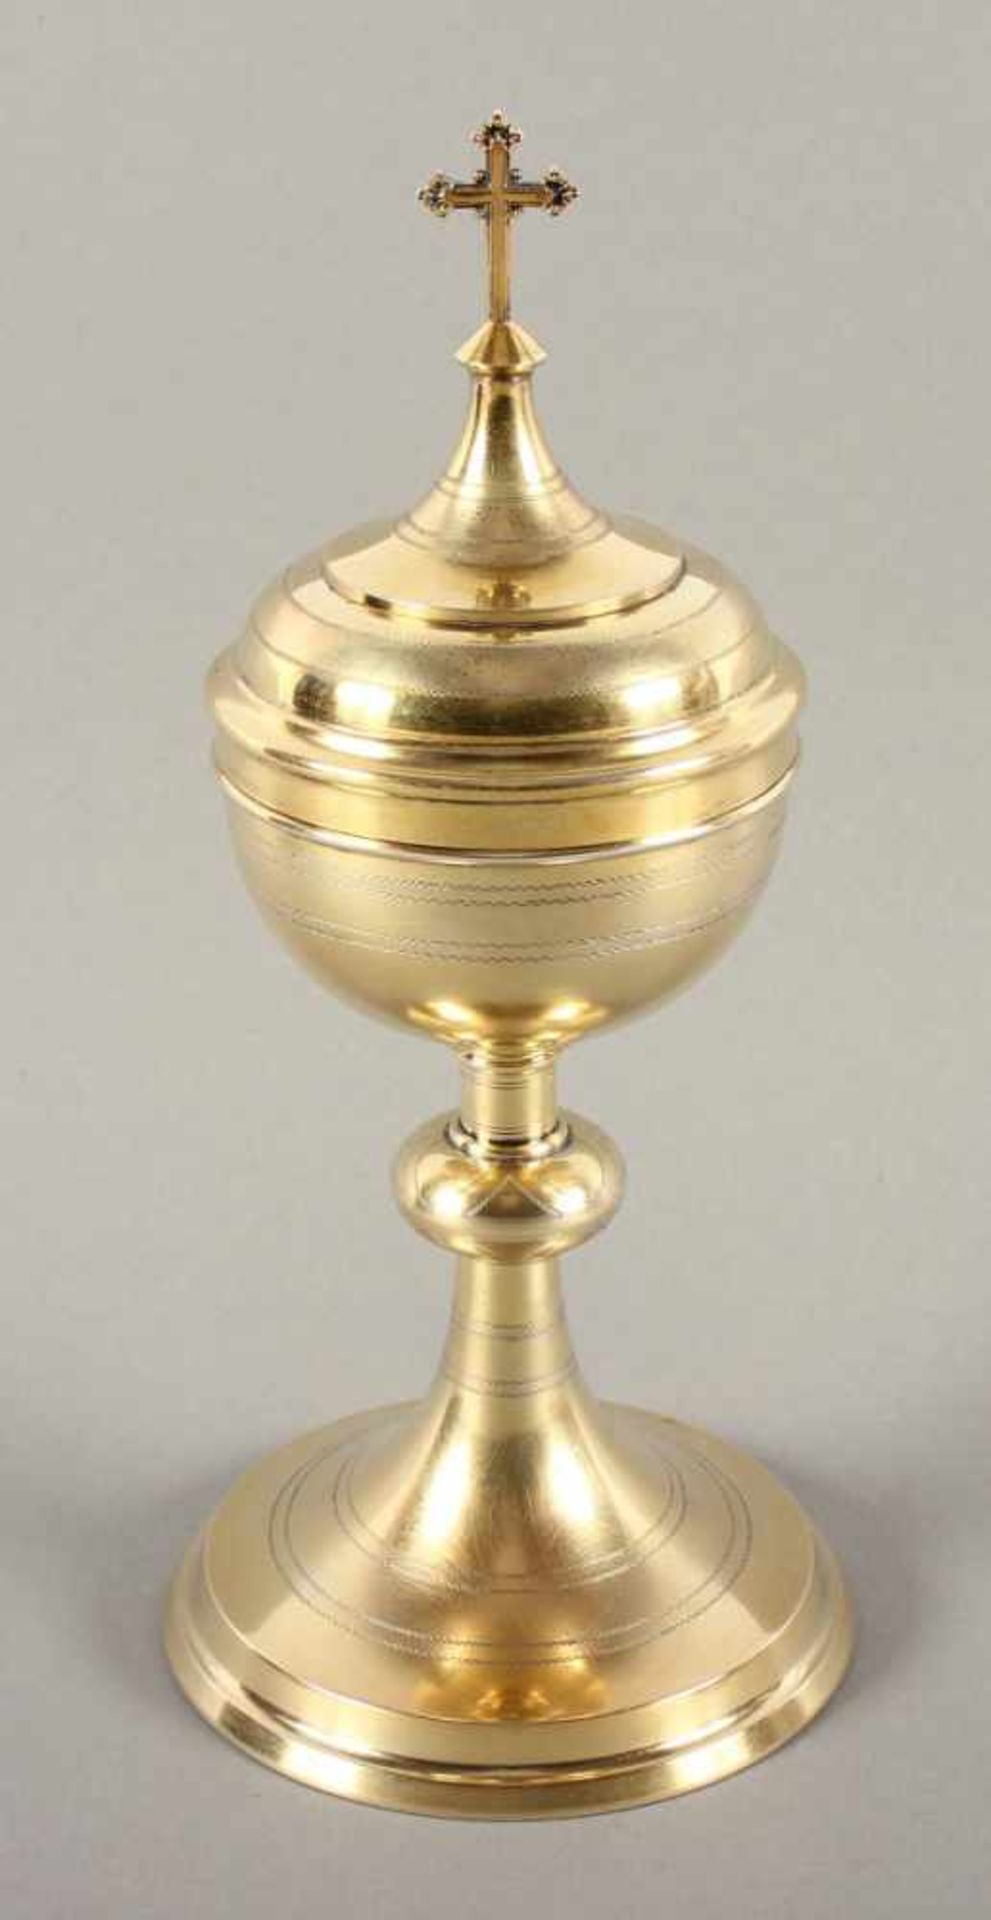 KÖLNER ZIBORIUM, 800/ooo, vergoldet, Stülpdeckel mit Kreuzbekrönung, Gravurdekor, H 31, 584g, im Fuß